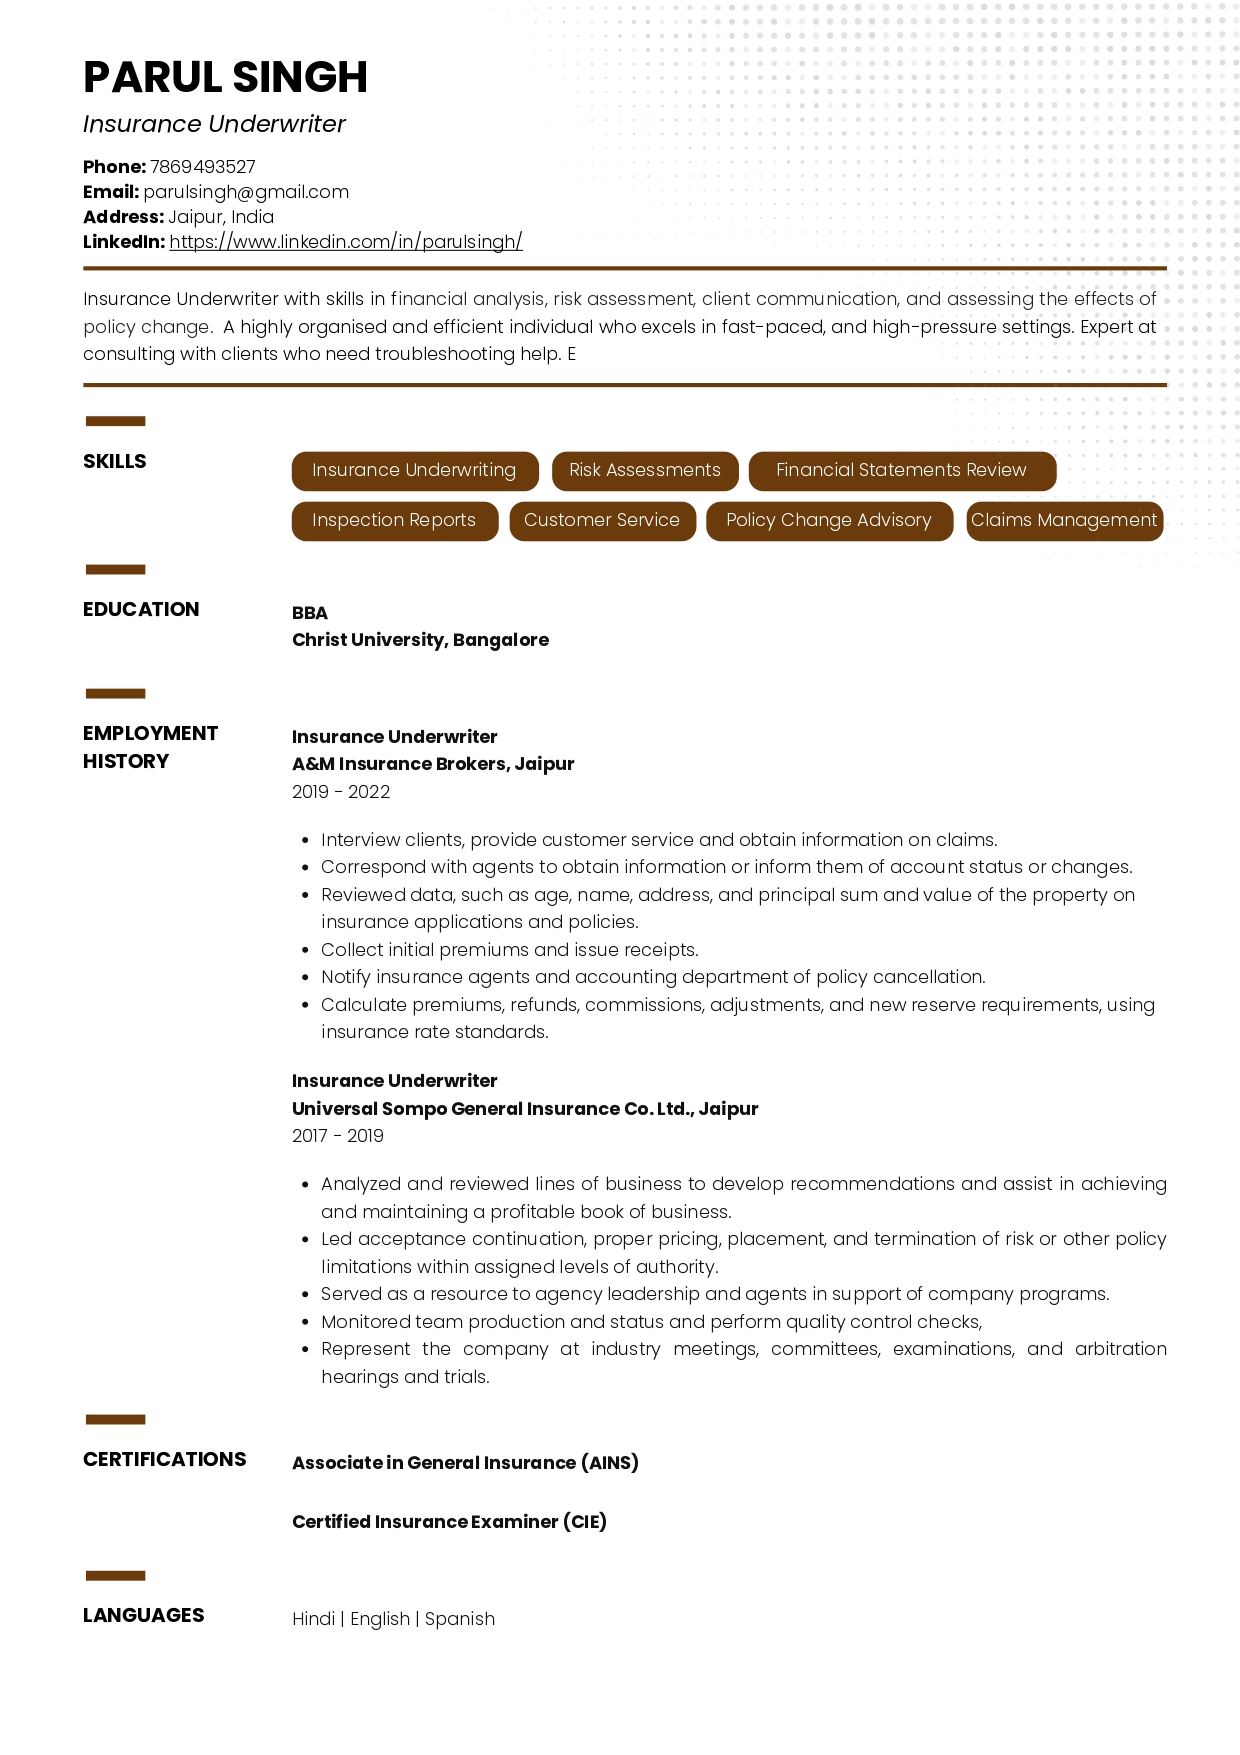 Sample Resume Of Insurance Underwriter | Free Resume Templates & Samples on Resumod.co